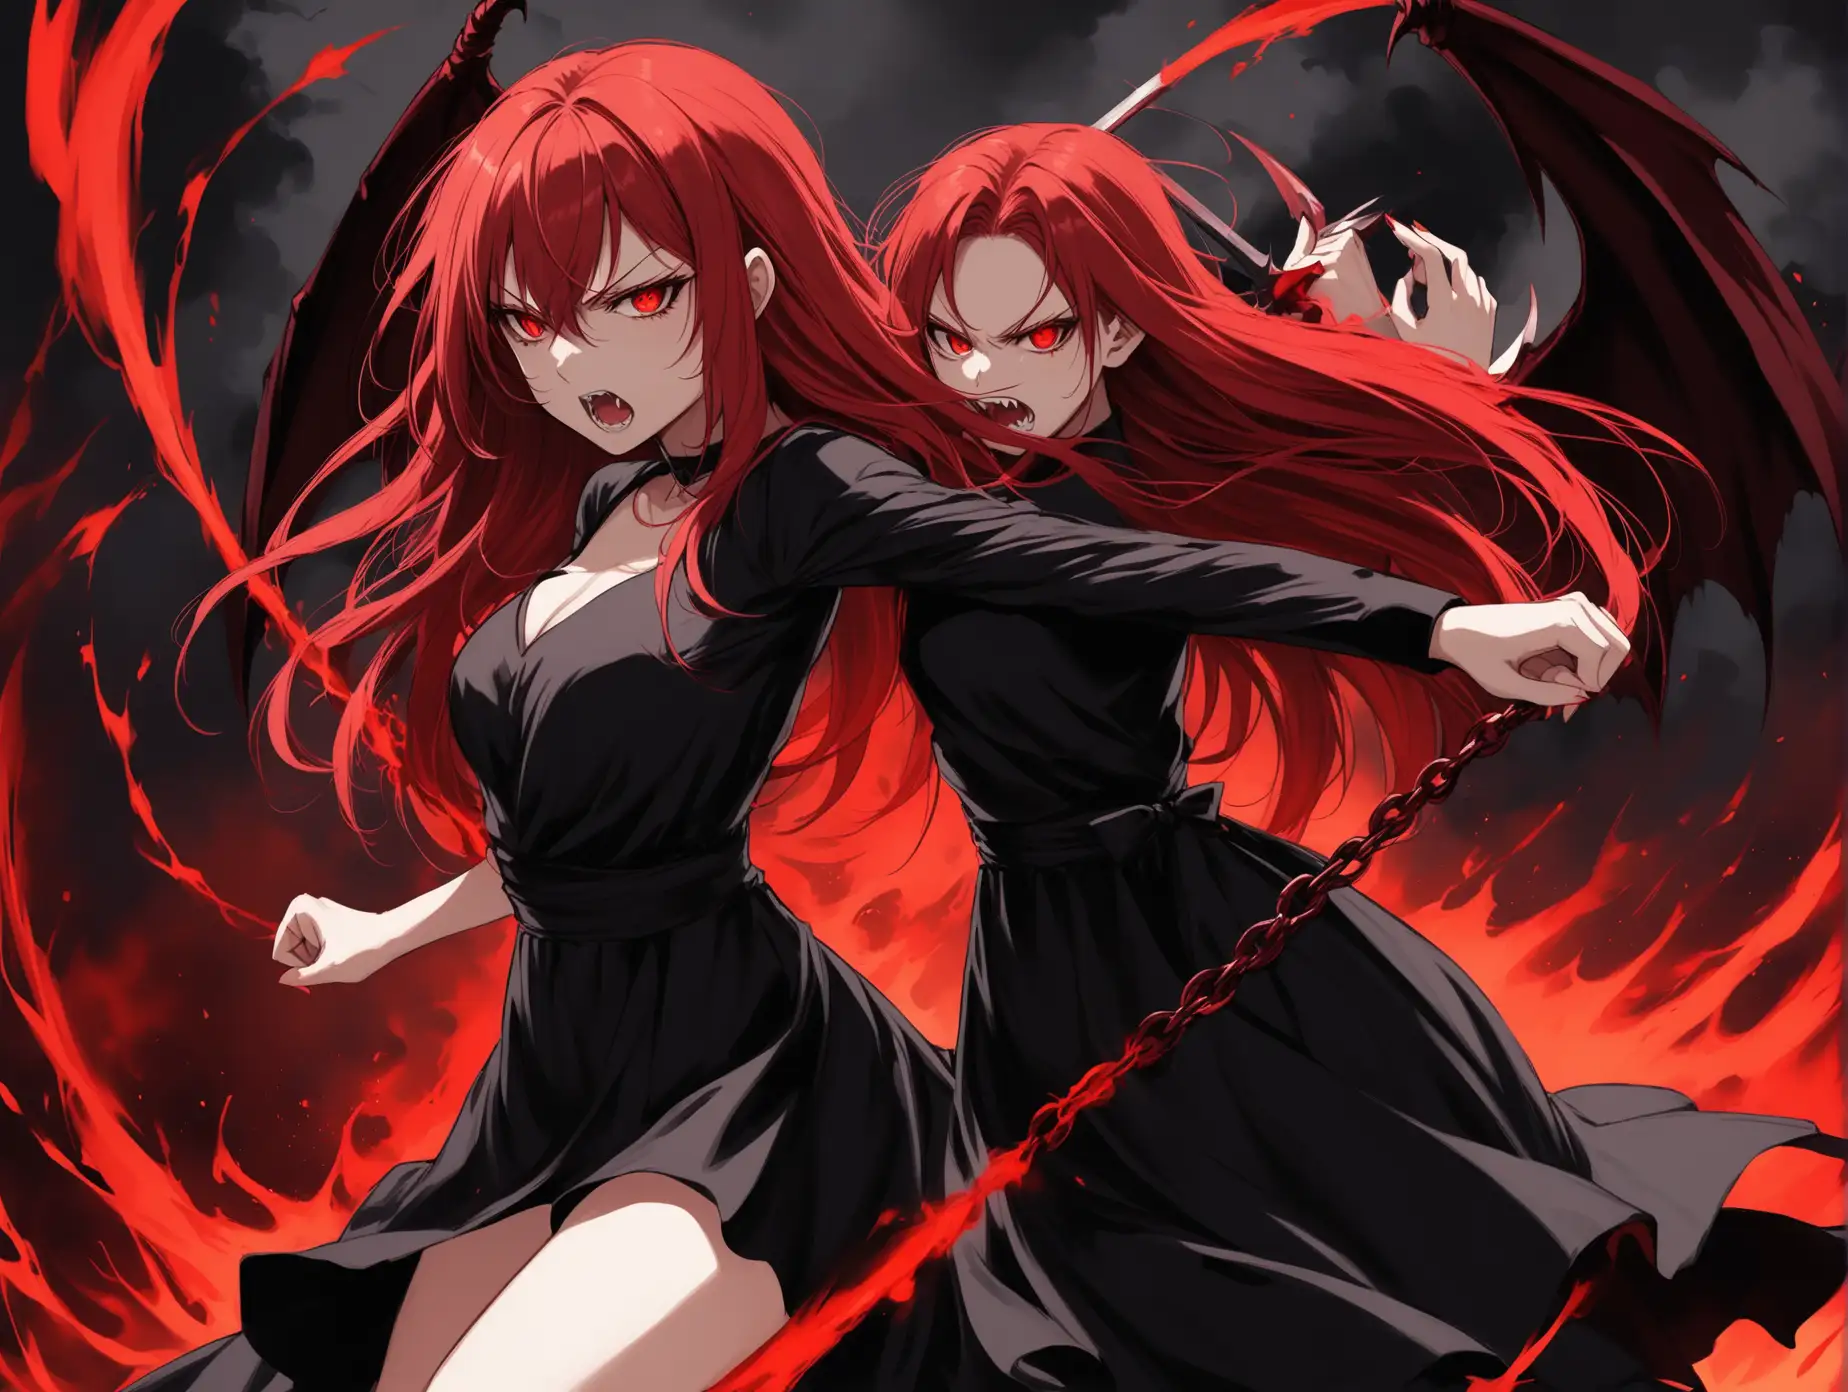 RedHaired Evil Girl in Black Dress Battling Demons in High Definition